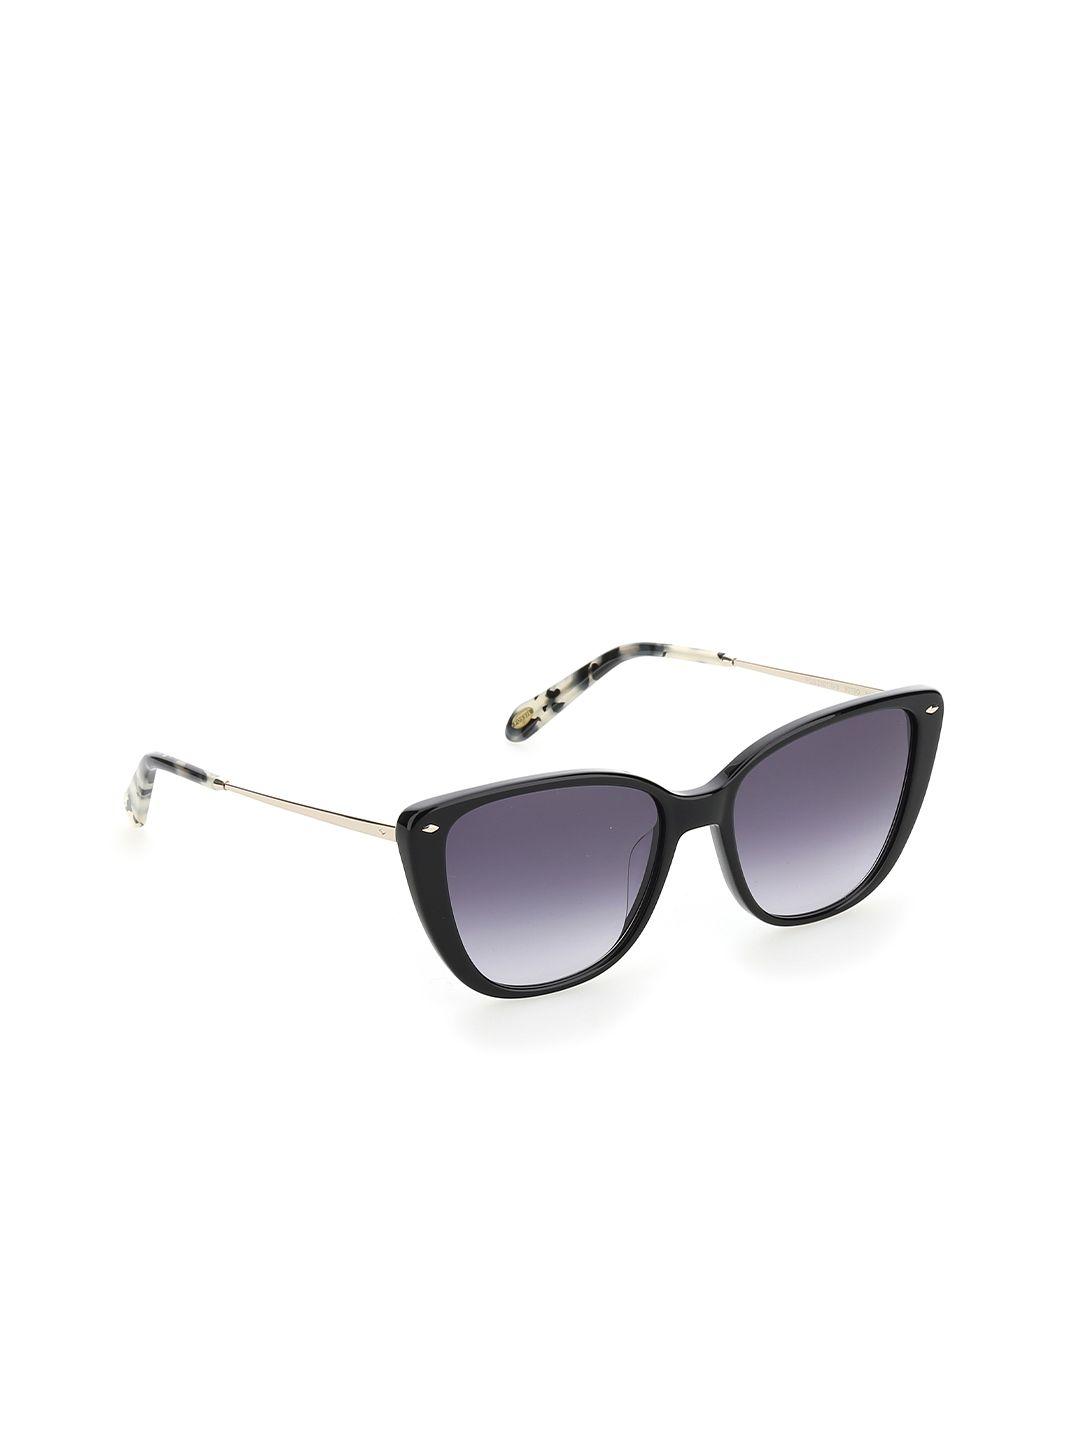 fossil-women-grey-lens-&-black-full-rim-cateye-sunglasses